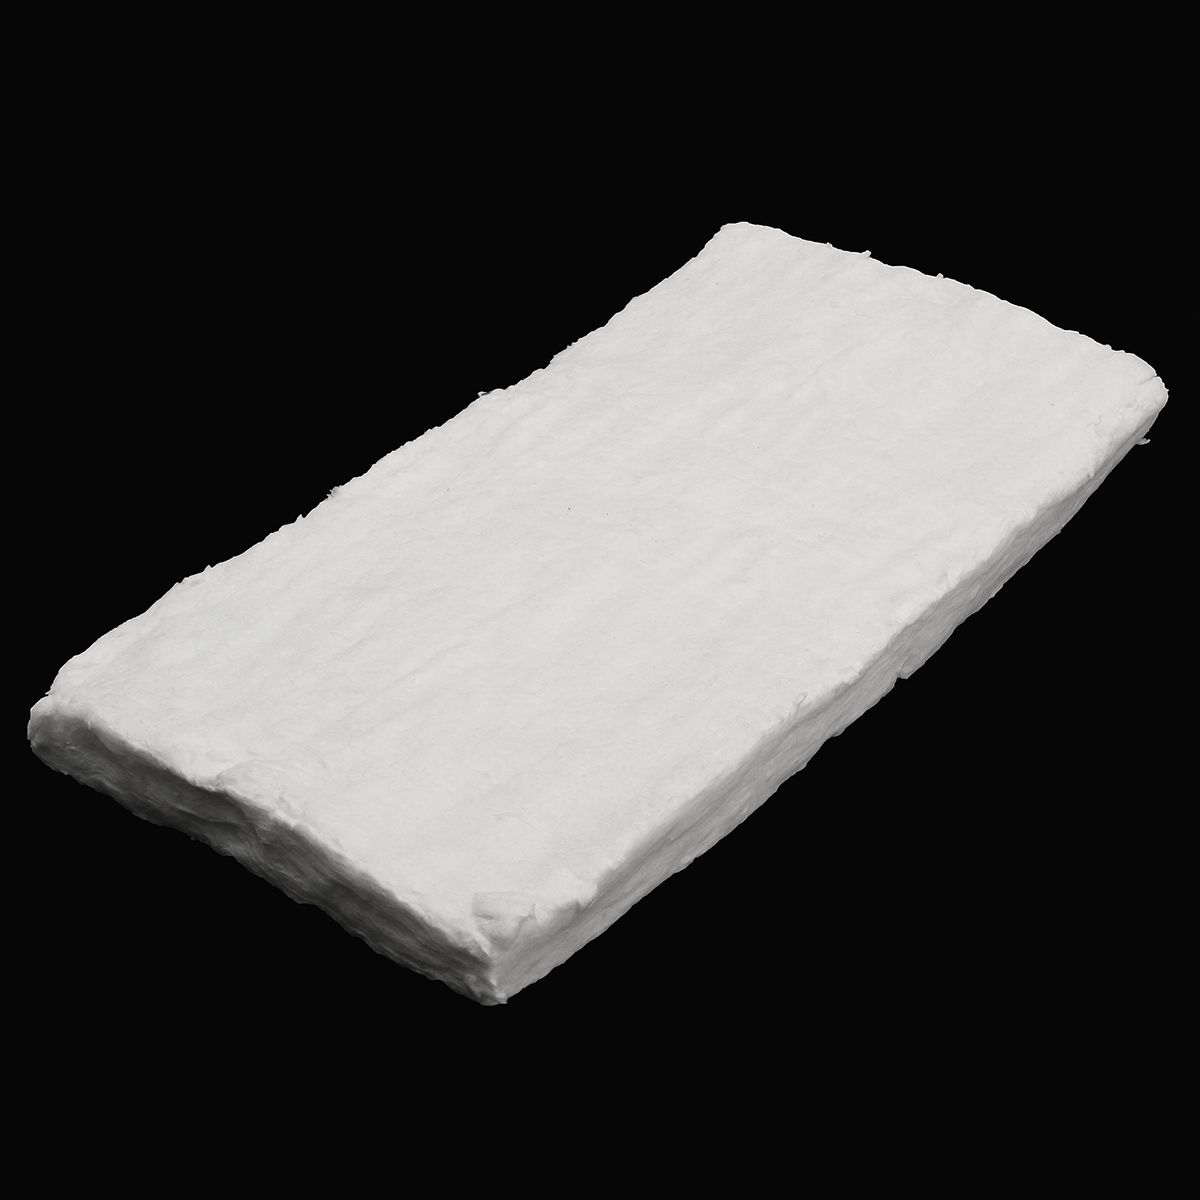 24x12x2-Inch-Aluminum-Silicate-Pad-High-Temperature-Insulation-Ceramic-Fiber-Blanket-1258023-1